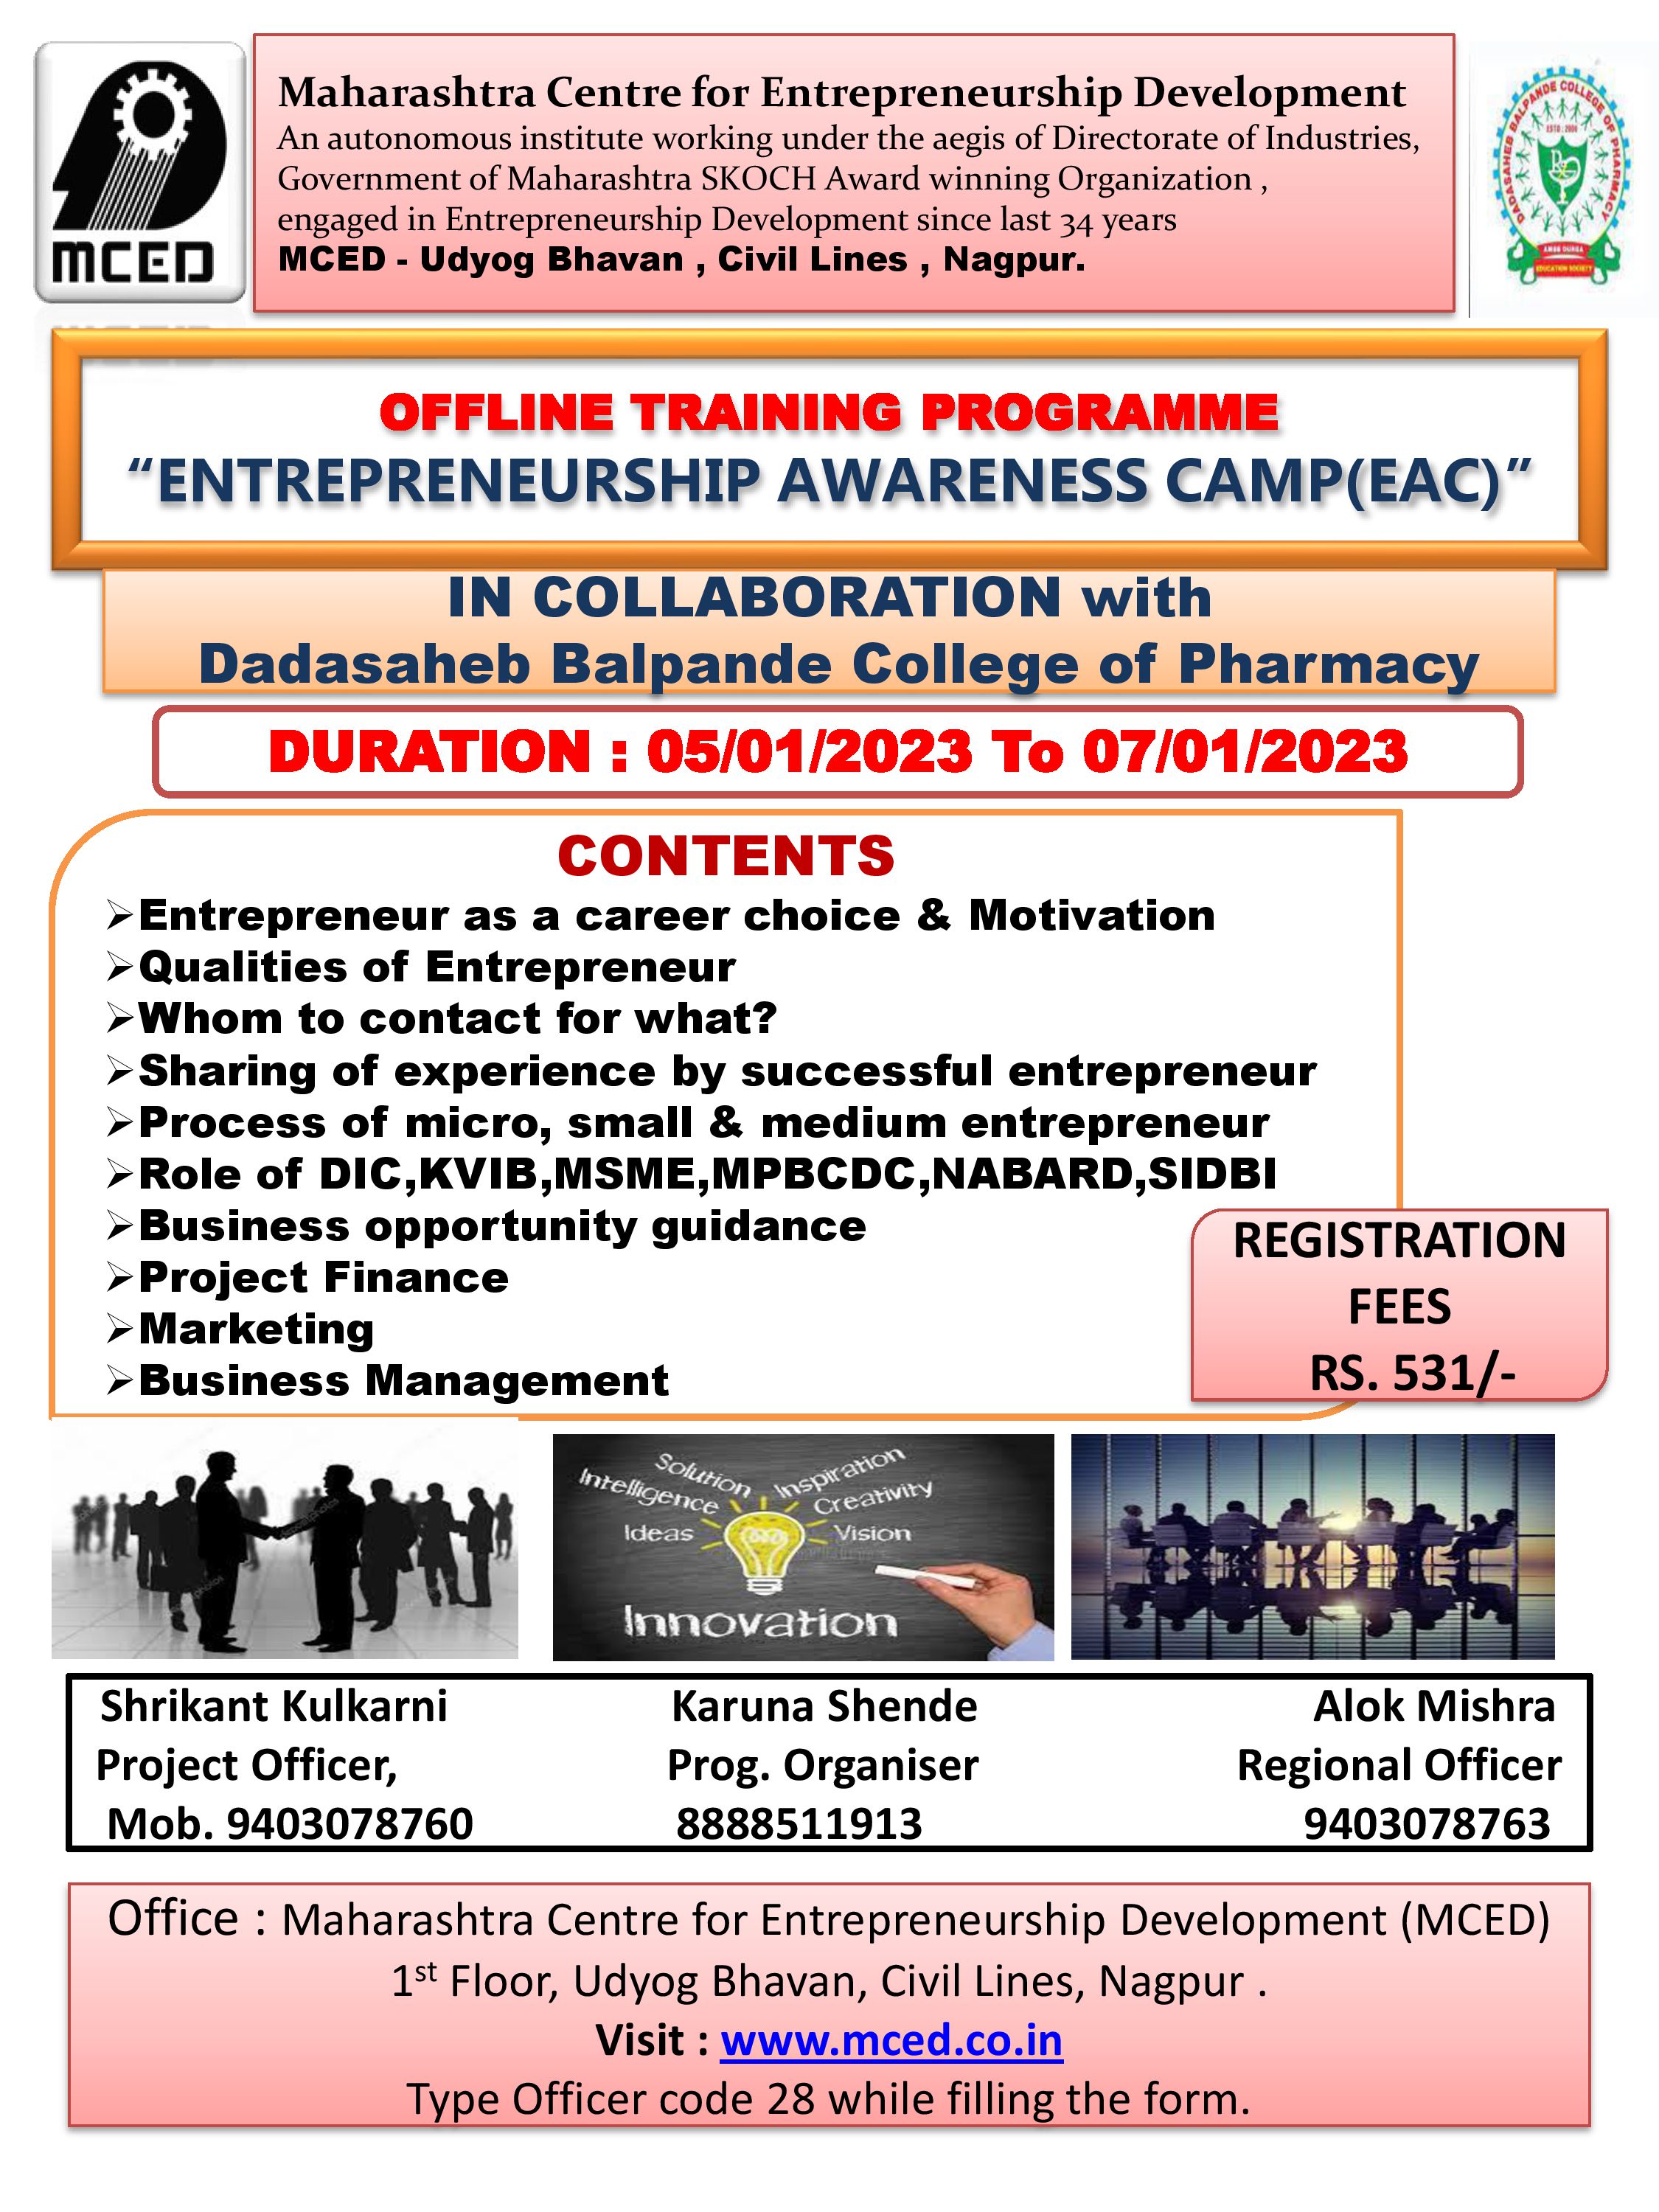 Offline Entrepreneurship Awareness Camp at Nagpur